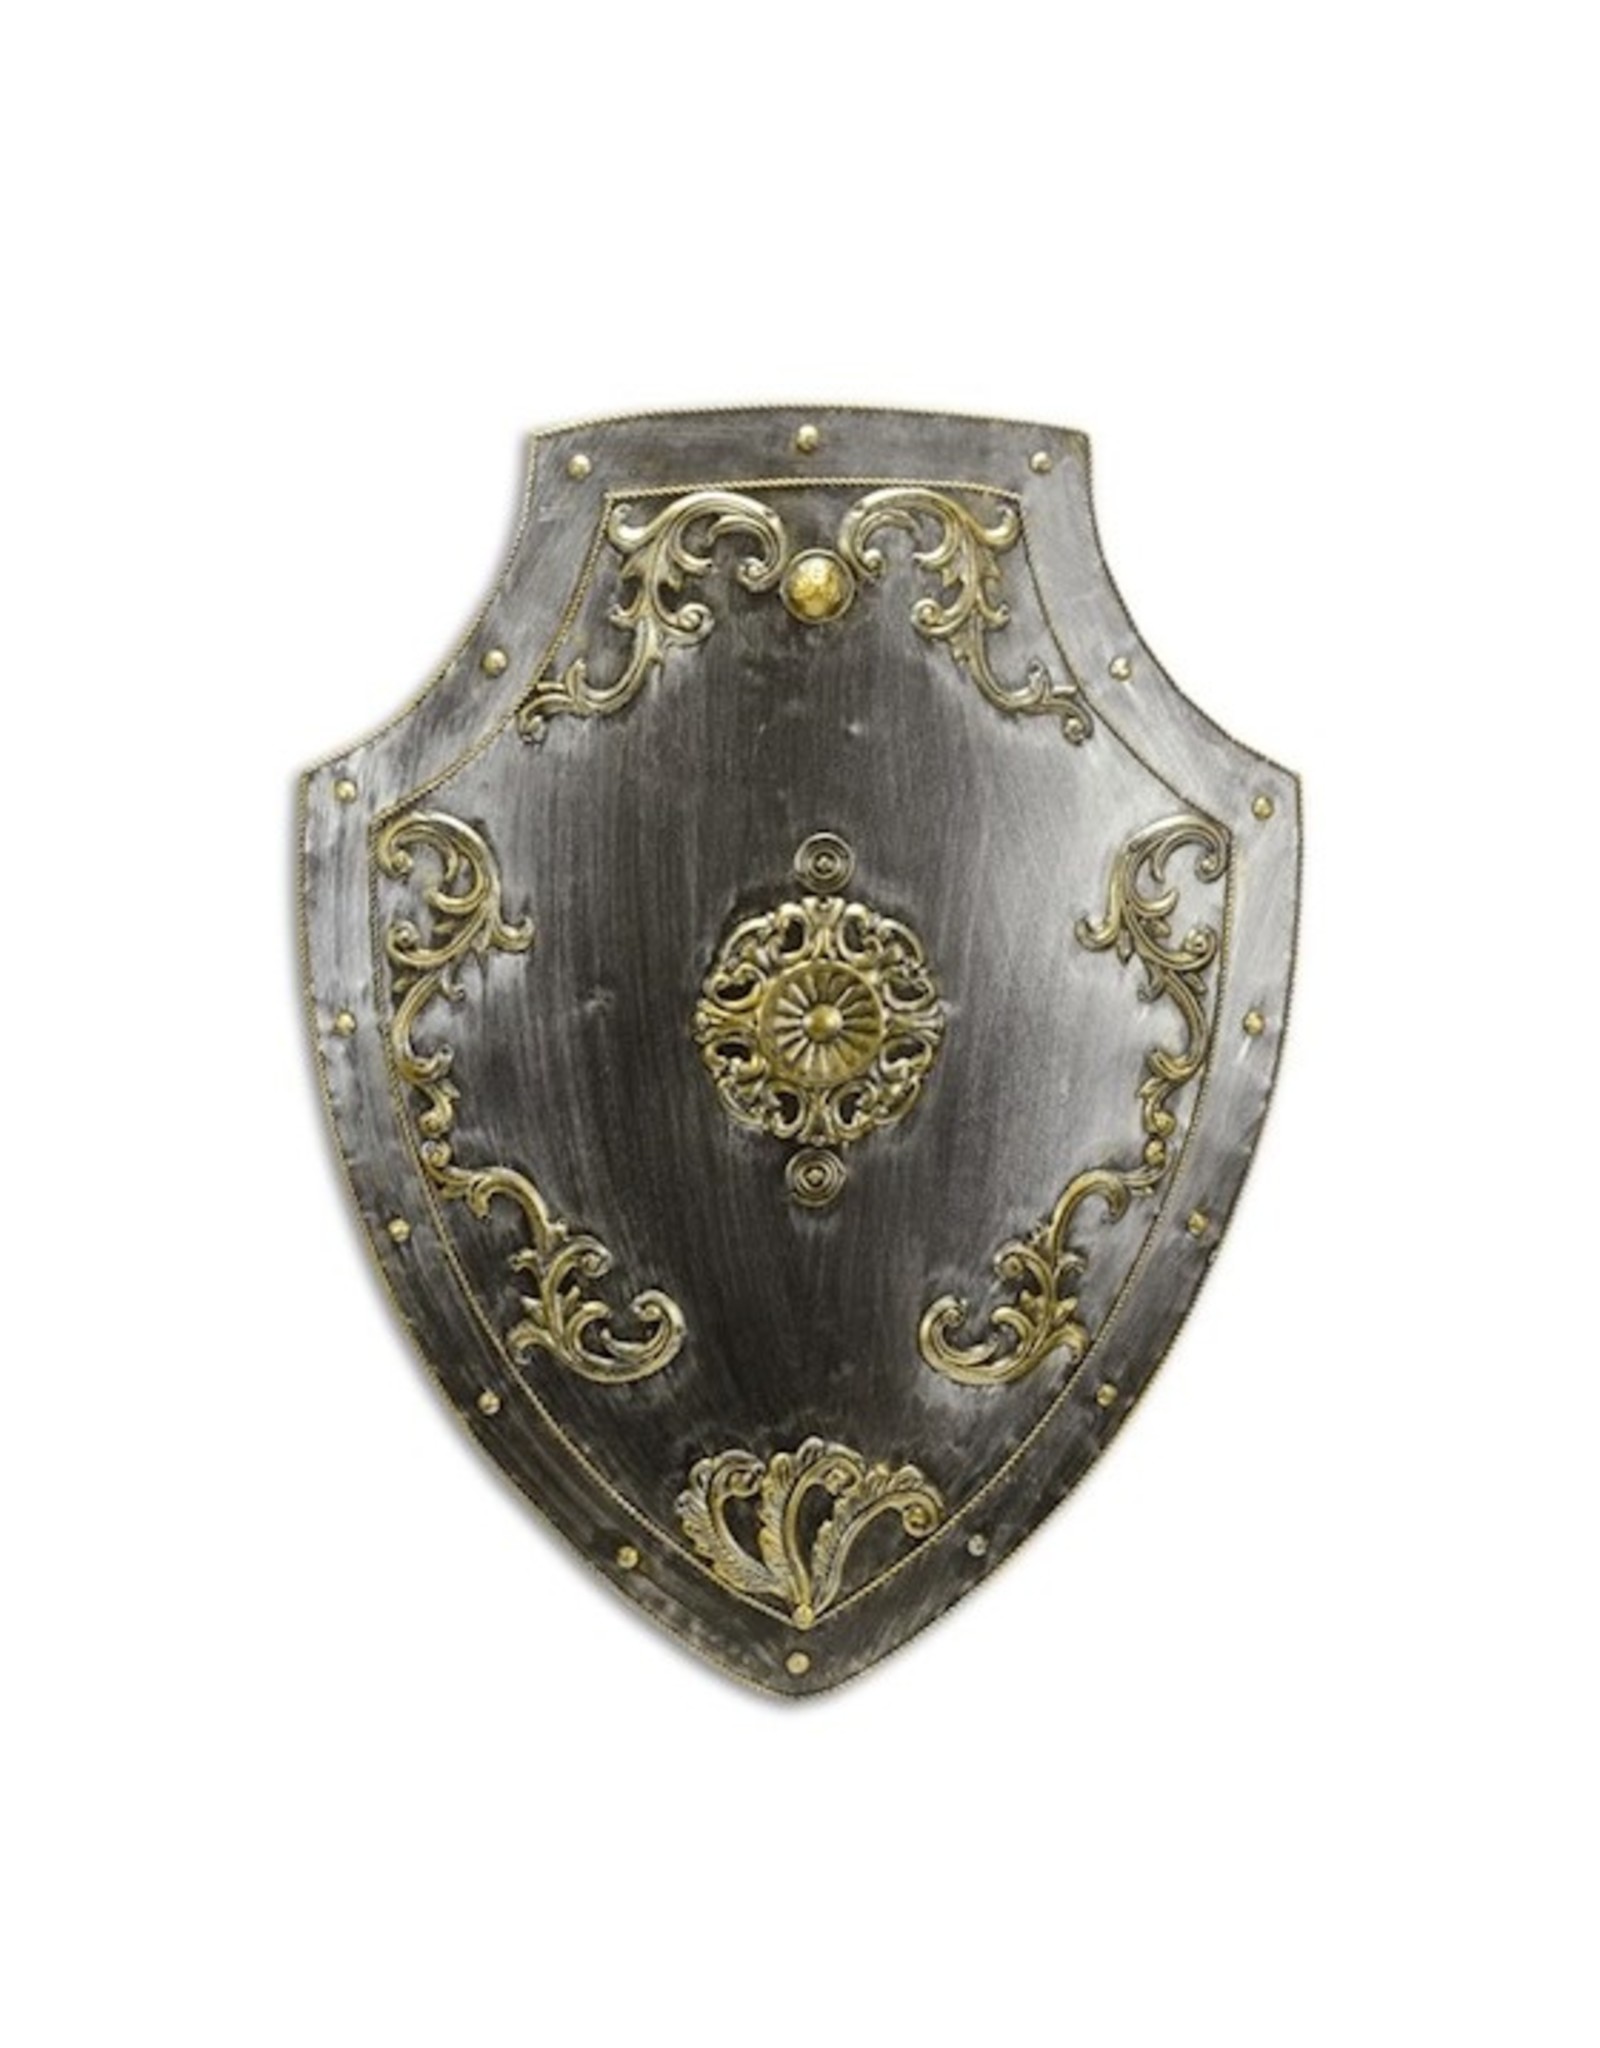 Trukado Miscellaneous - Decorated Iron Wall Mount Shield (silver-gold colored)